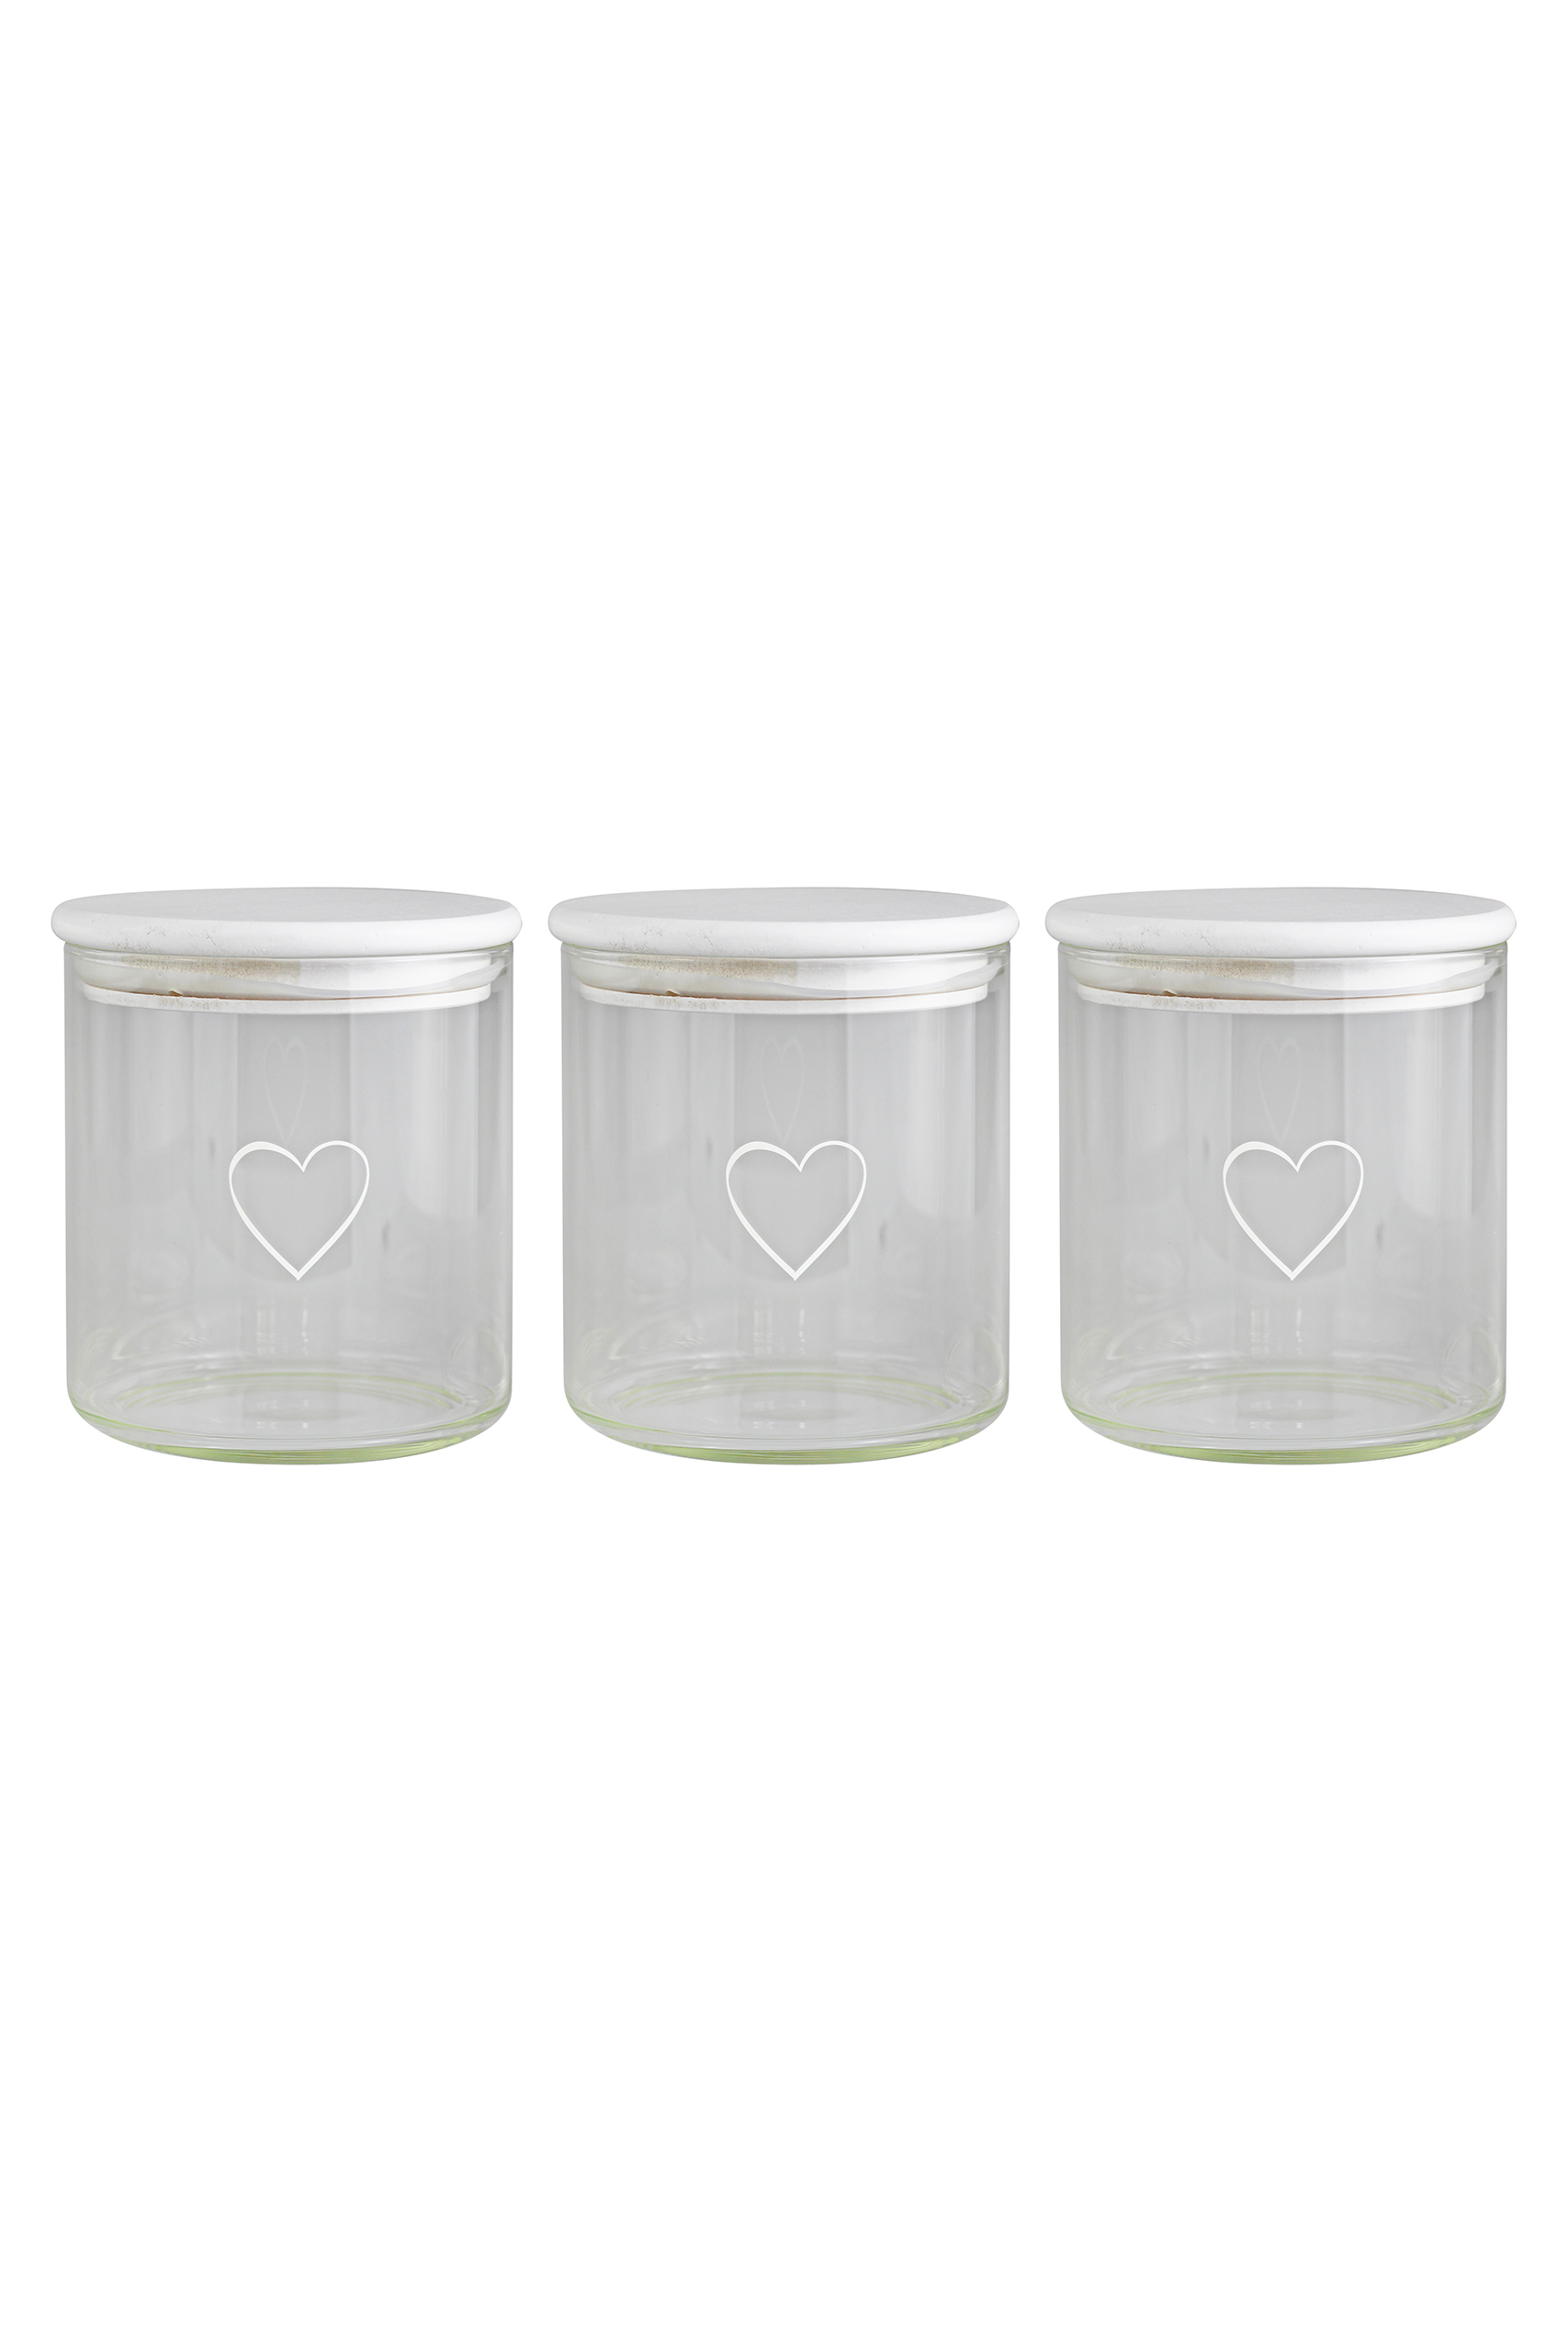 Set 3 Glass White Heart Bamboo Storage Jars -White lid 600ml | Pretty Little Home